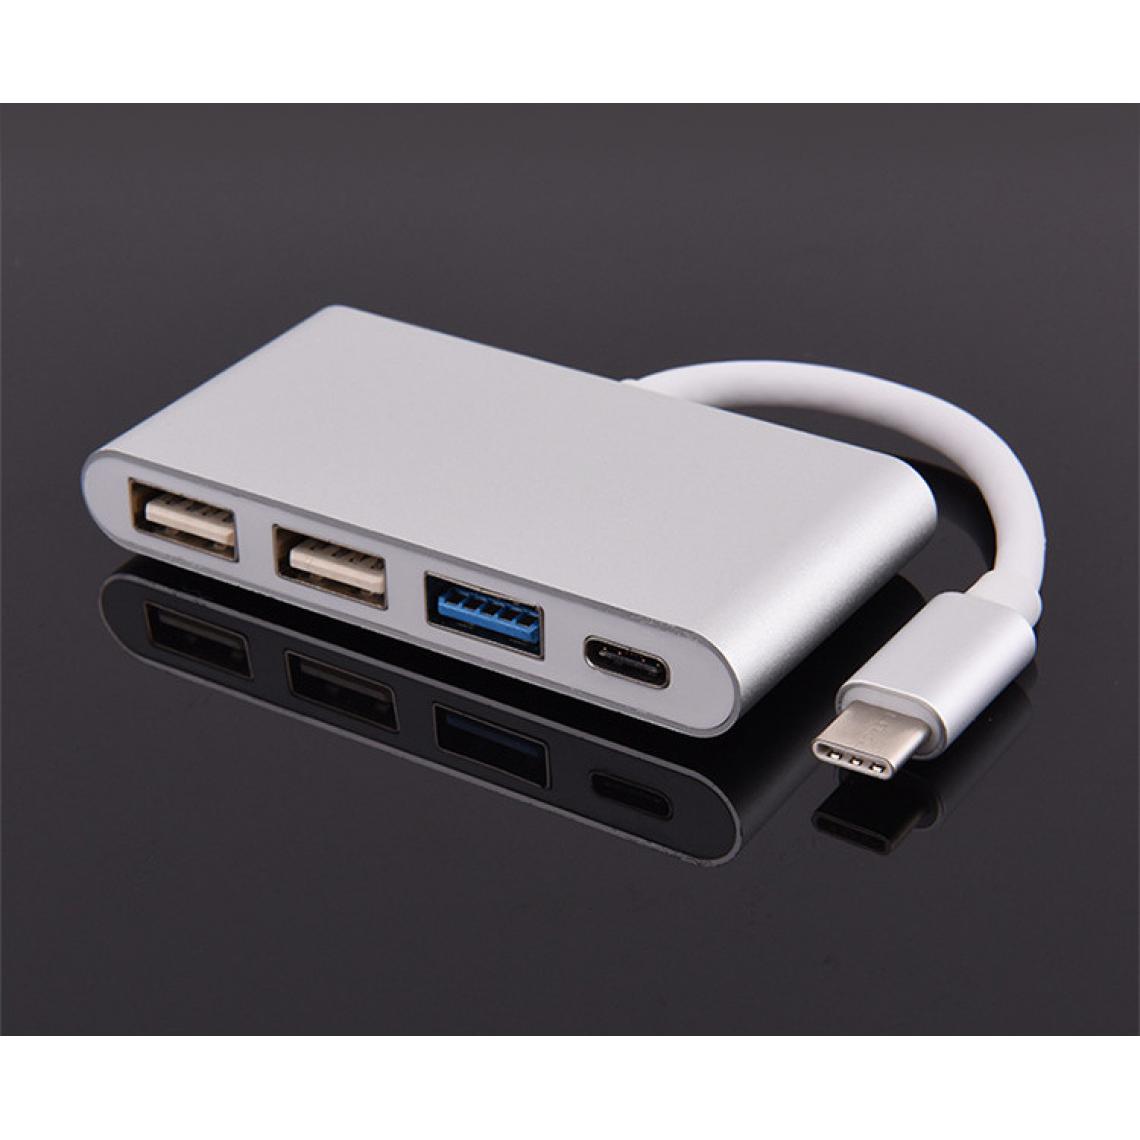 Shot - Multi Adaptateur 4 en 1 Type C pour SONY Xperia XA1 Ultra Smartphone Hub 2 ports USB 2.0 1 Port USB 3.0 (ARGENT) - Hub